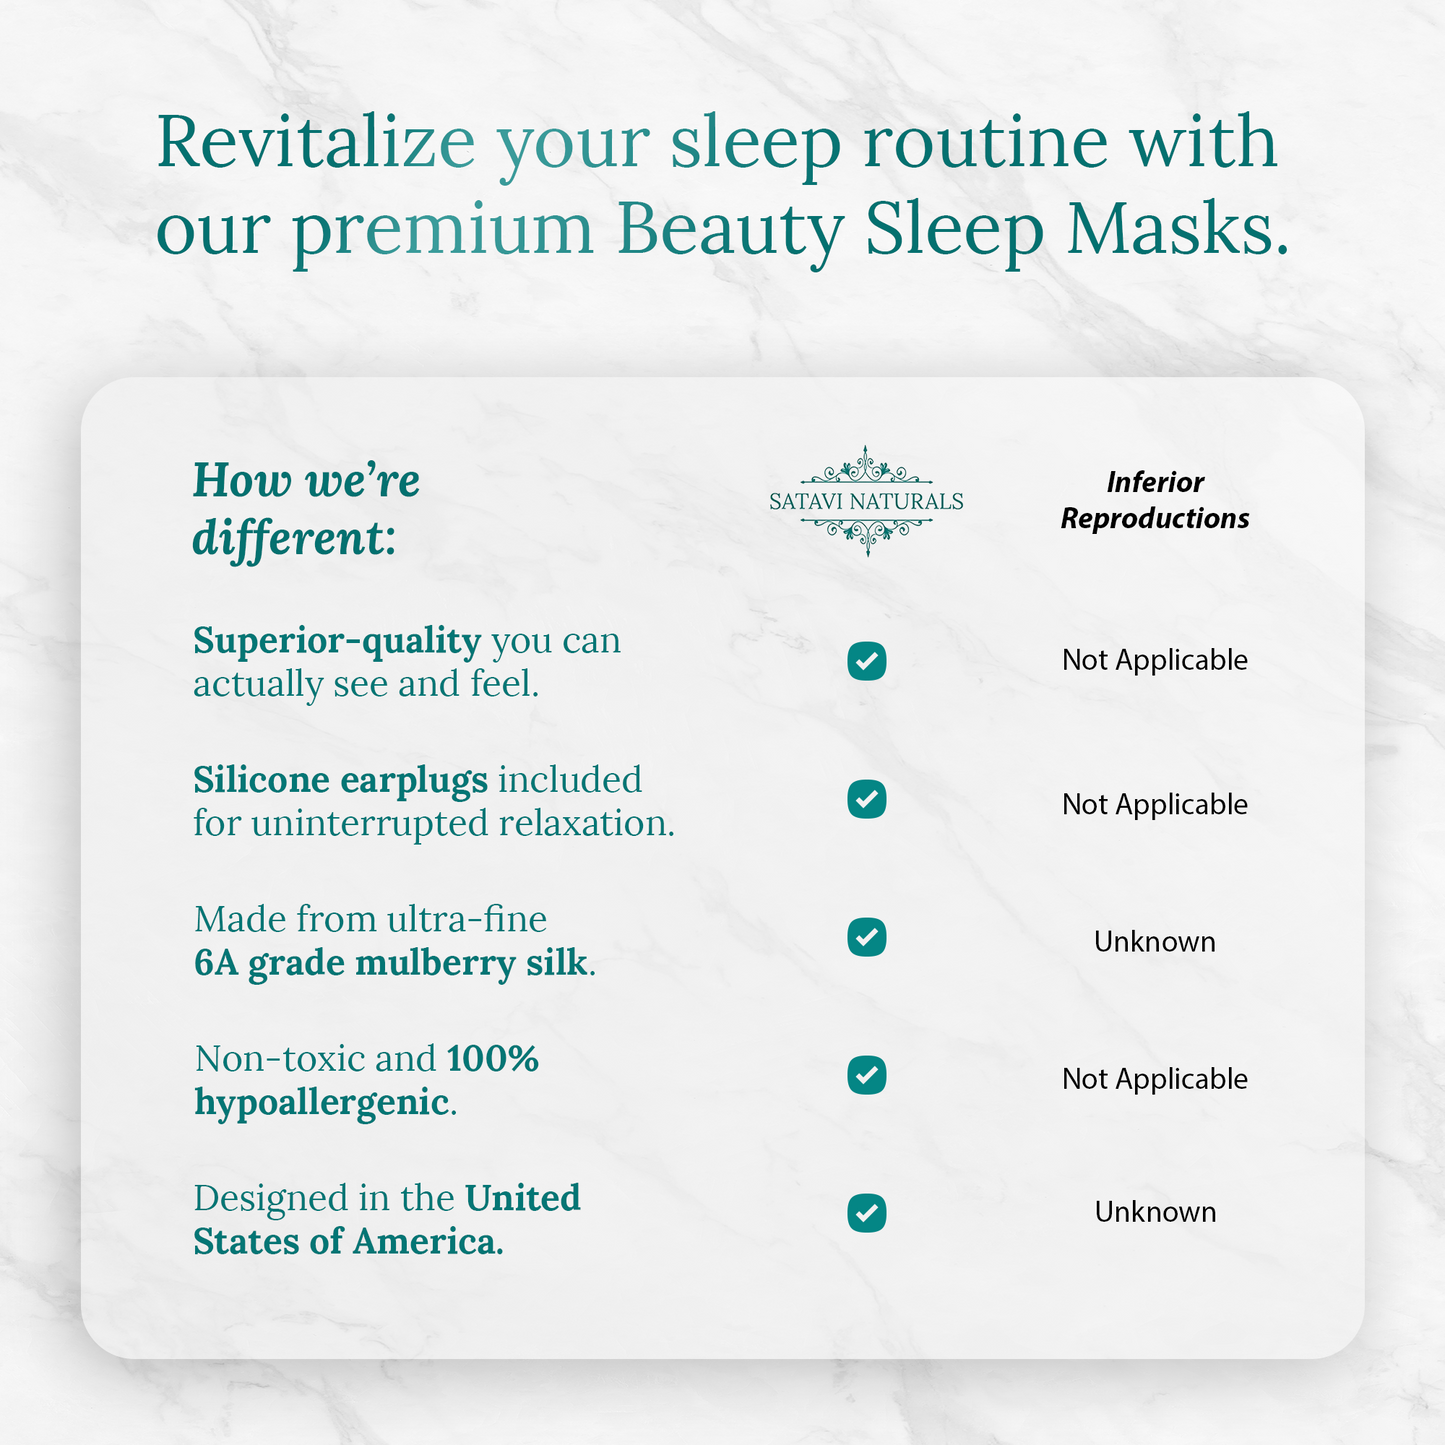 Beauty Sleep Masks